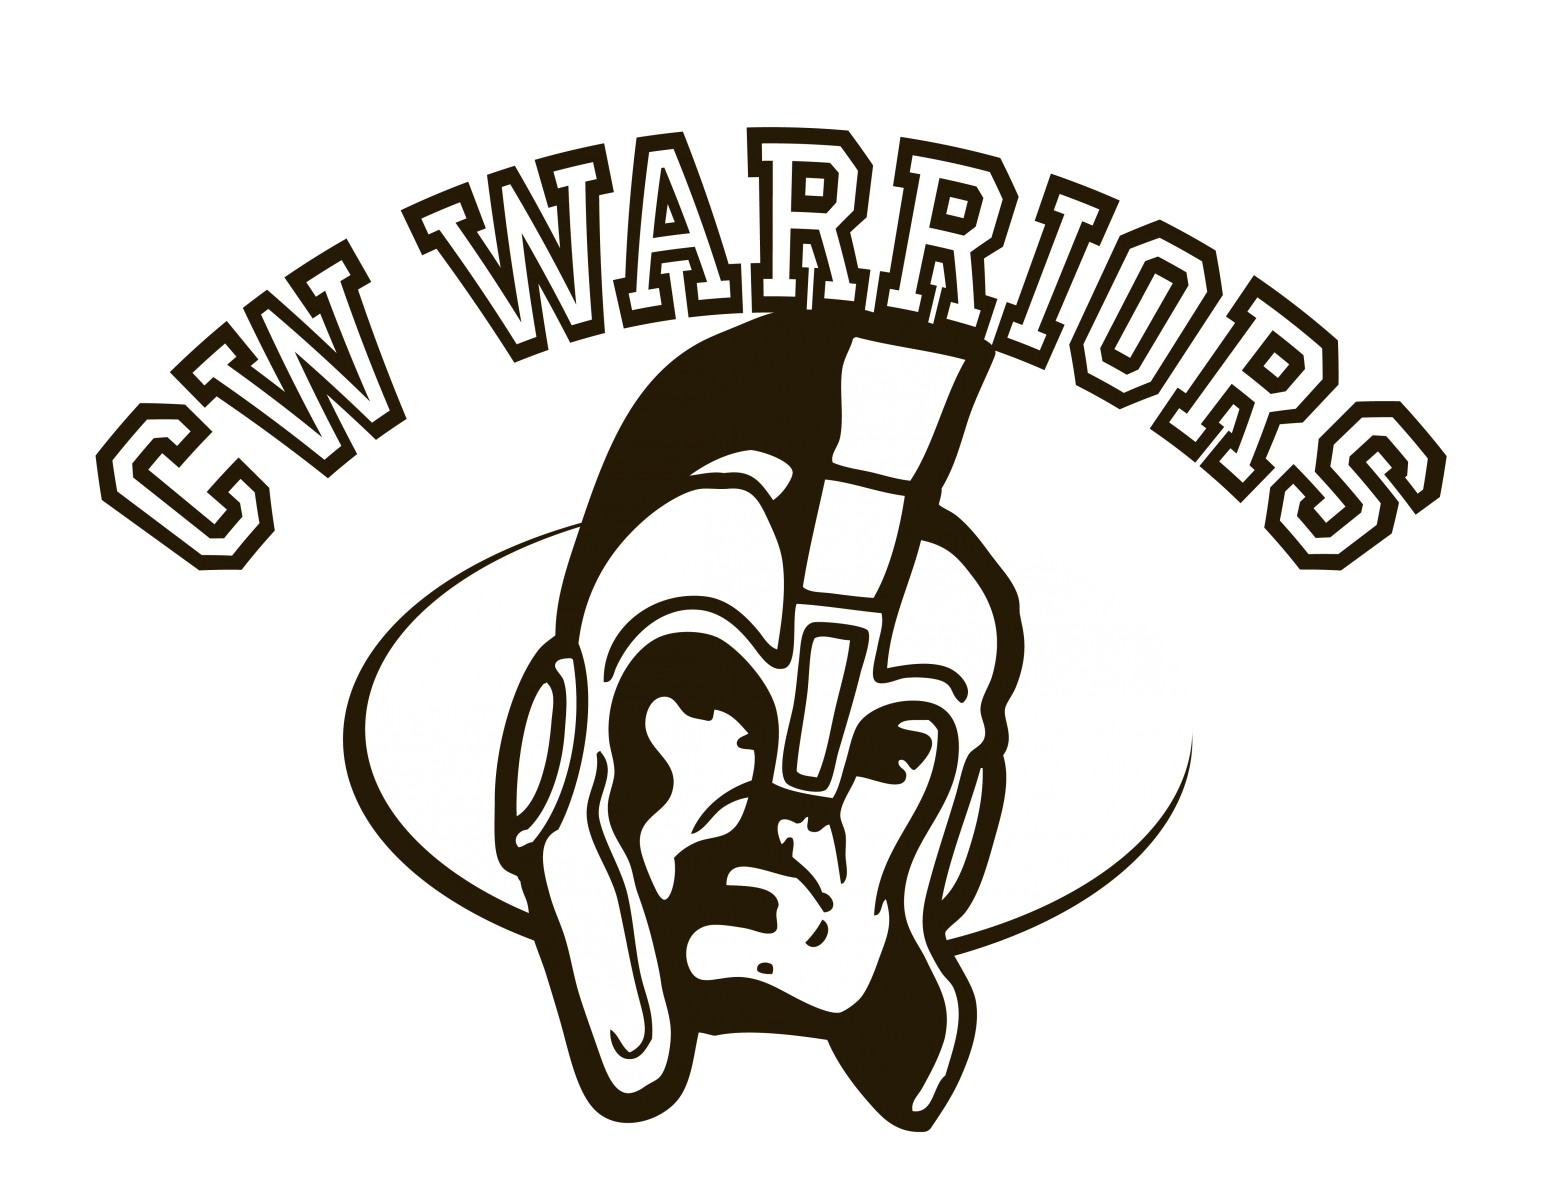 CW Warriors logo